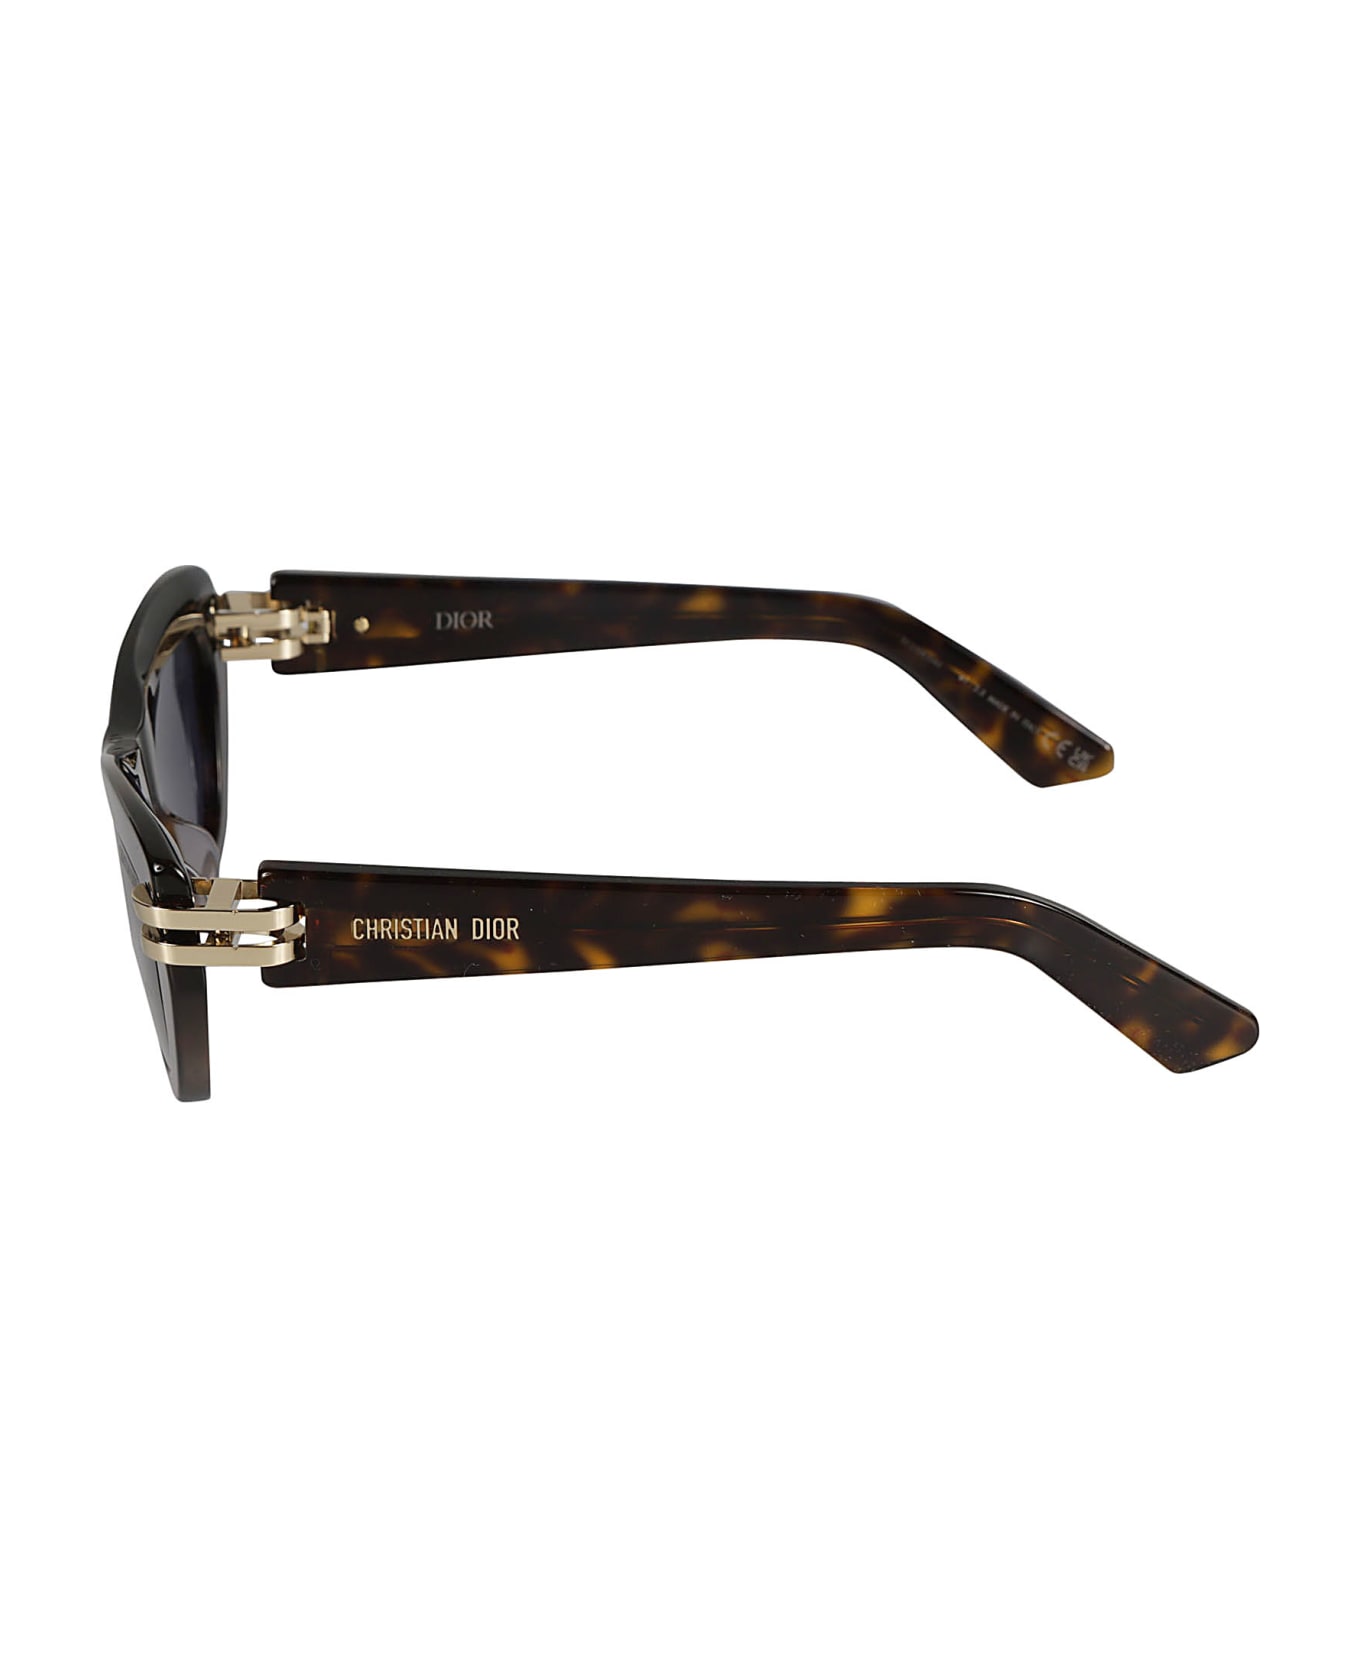 Dior Eyewear Cdior Sunglasses - 20b0